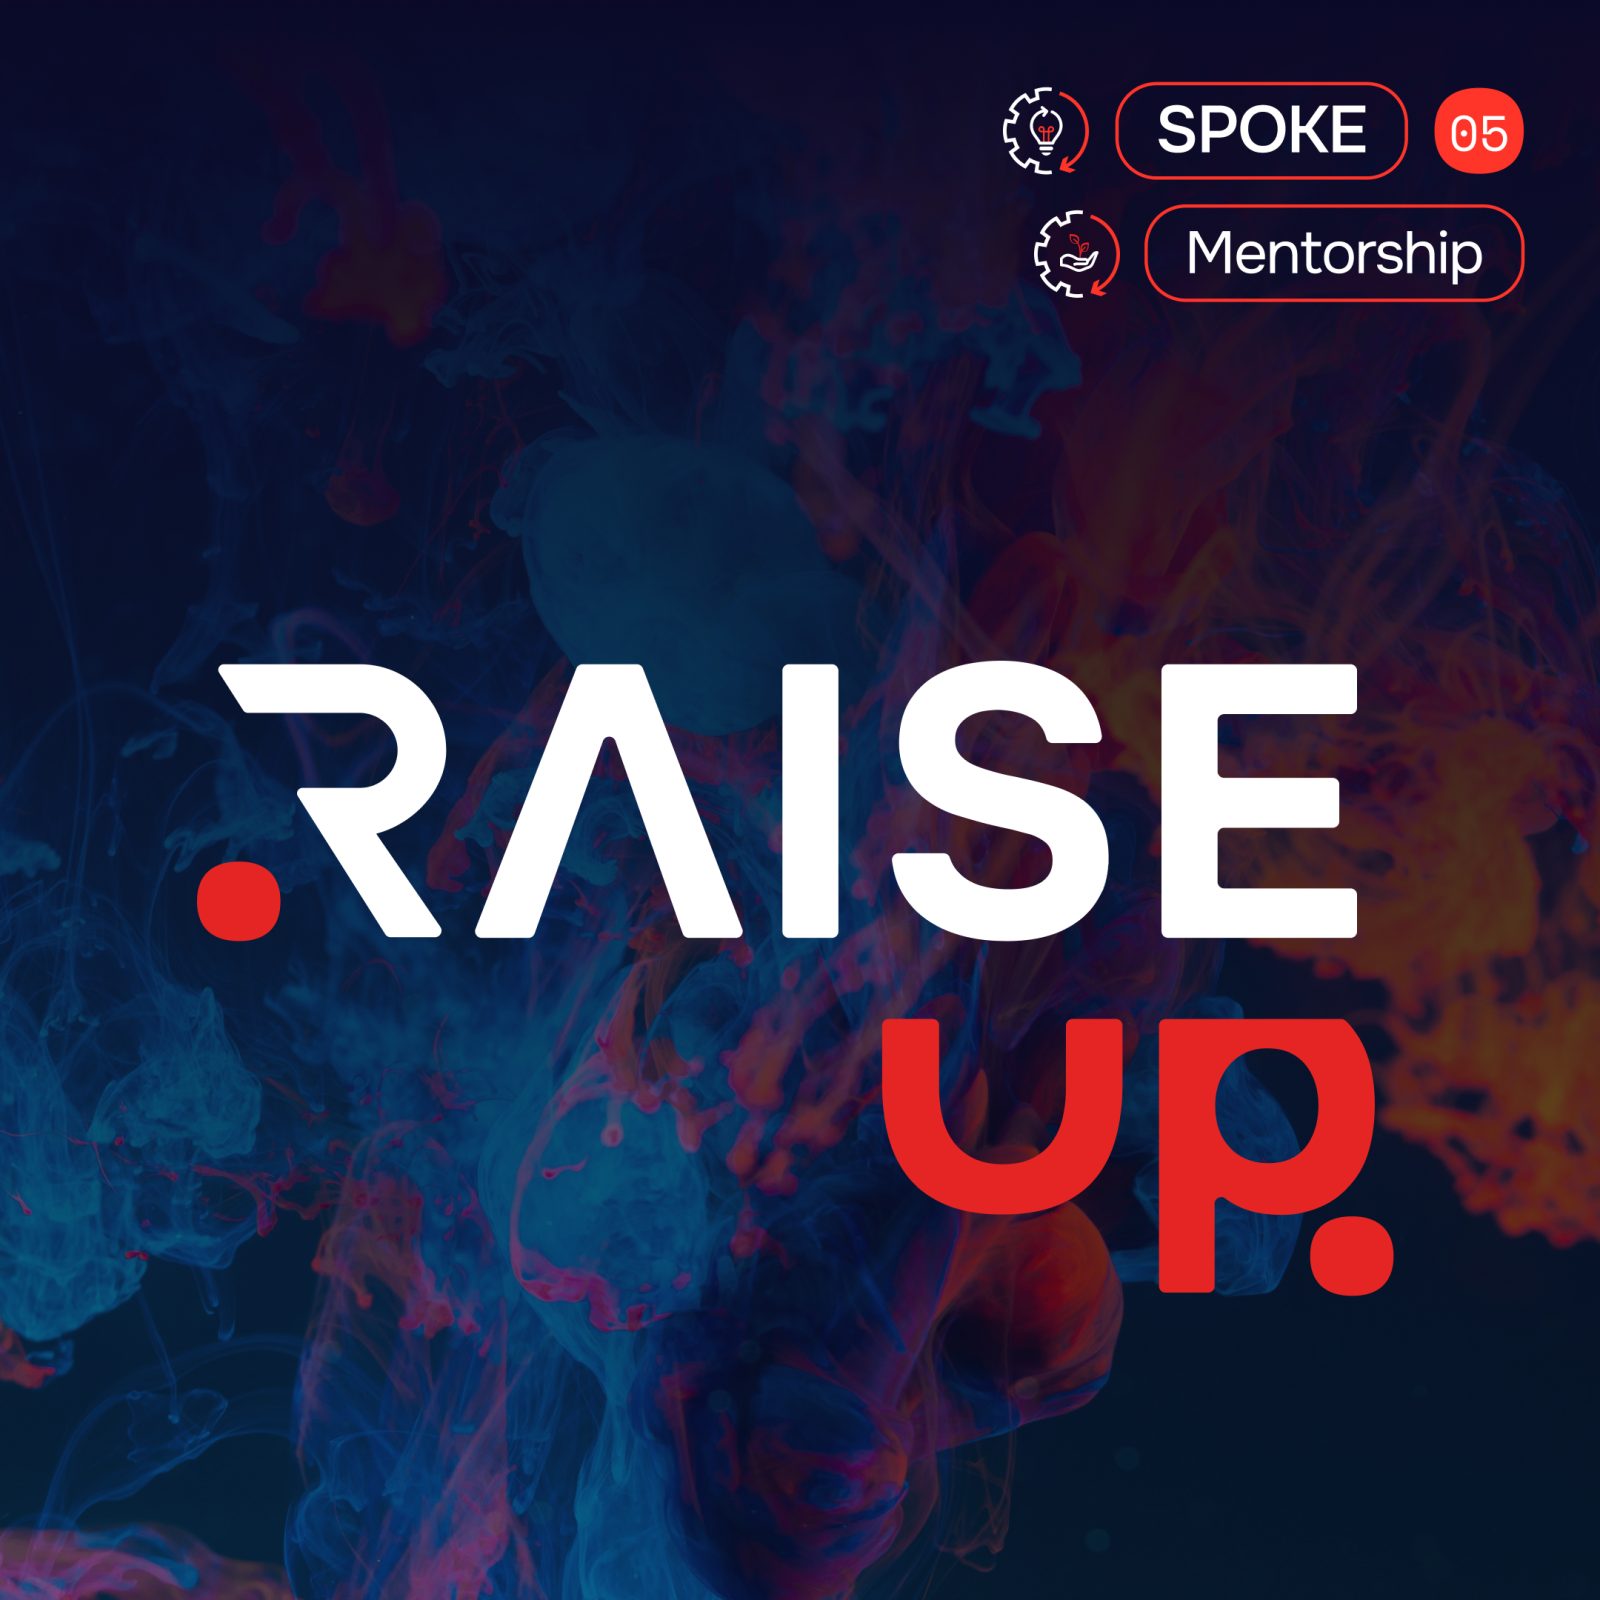 RAISE up - Programma Mentorship - Spoke 5 - Ecosistema RAISE